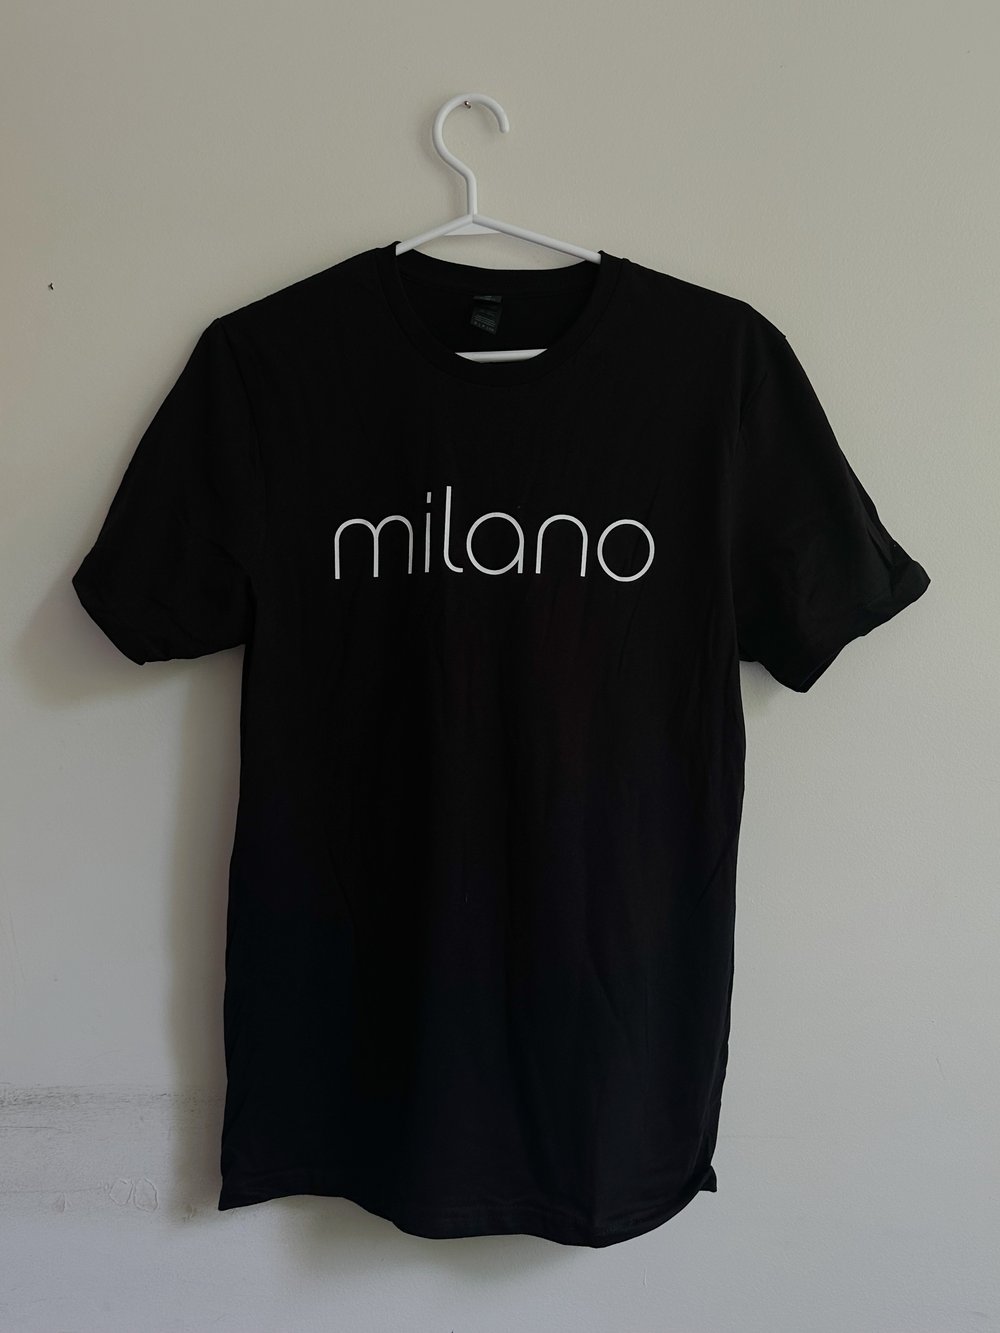 Milano T-Shirt (Black) — Milano Coffee